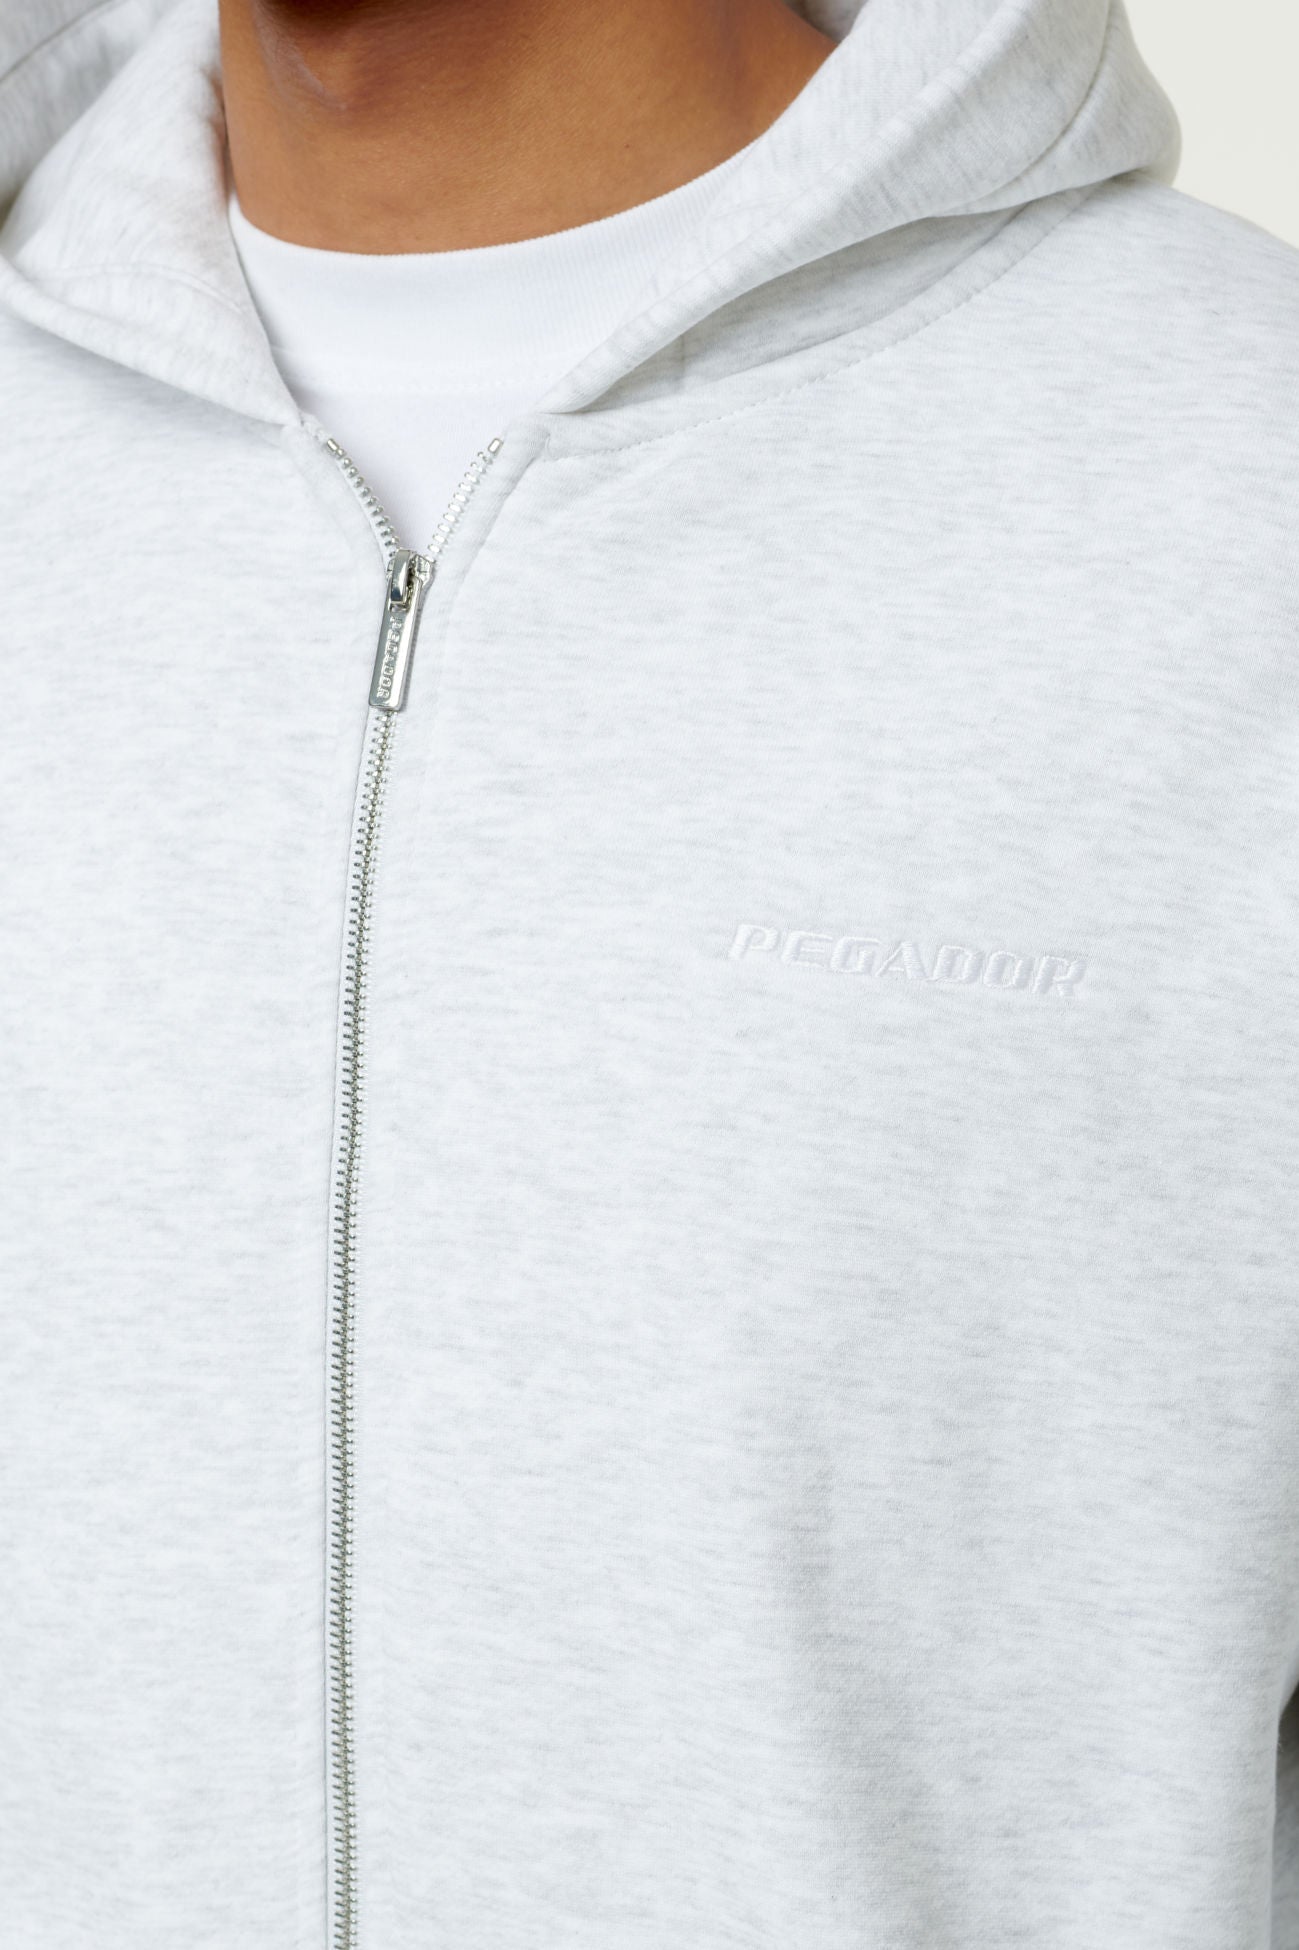 Logo Oversized Sweat Jacket Light Grey Melange Hoodies | Men No Role Model Men 